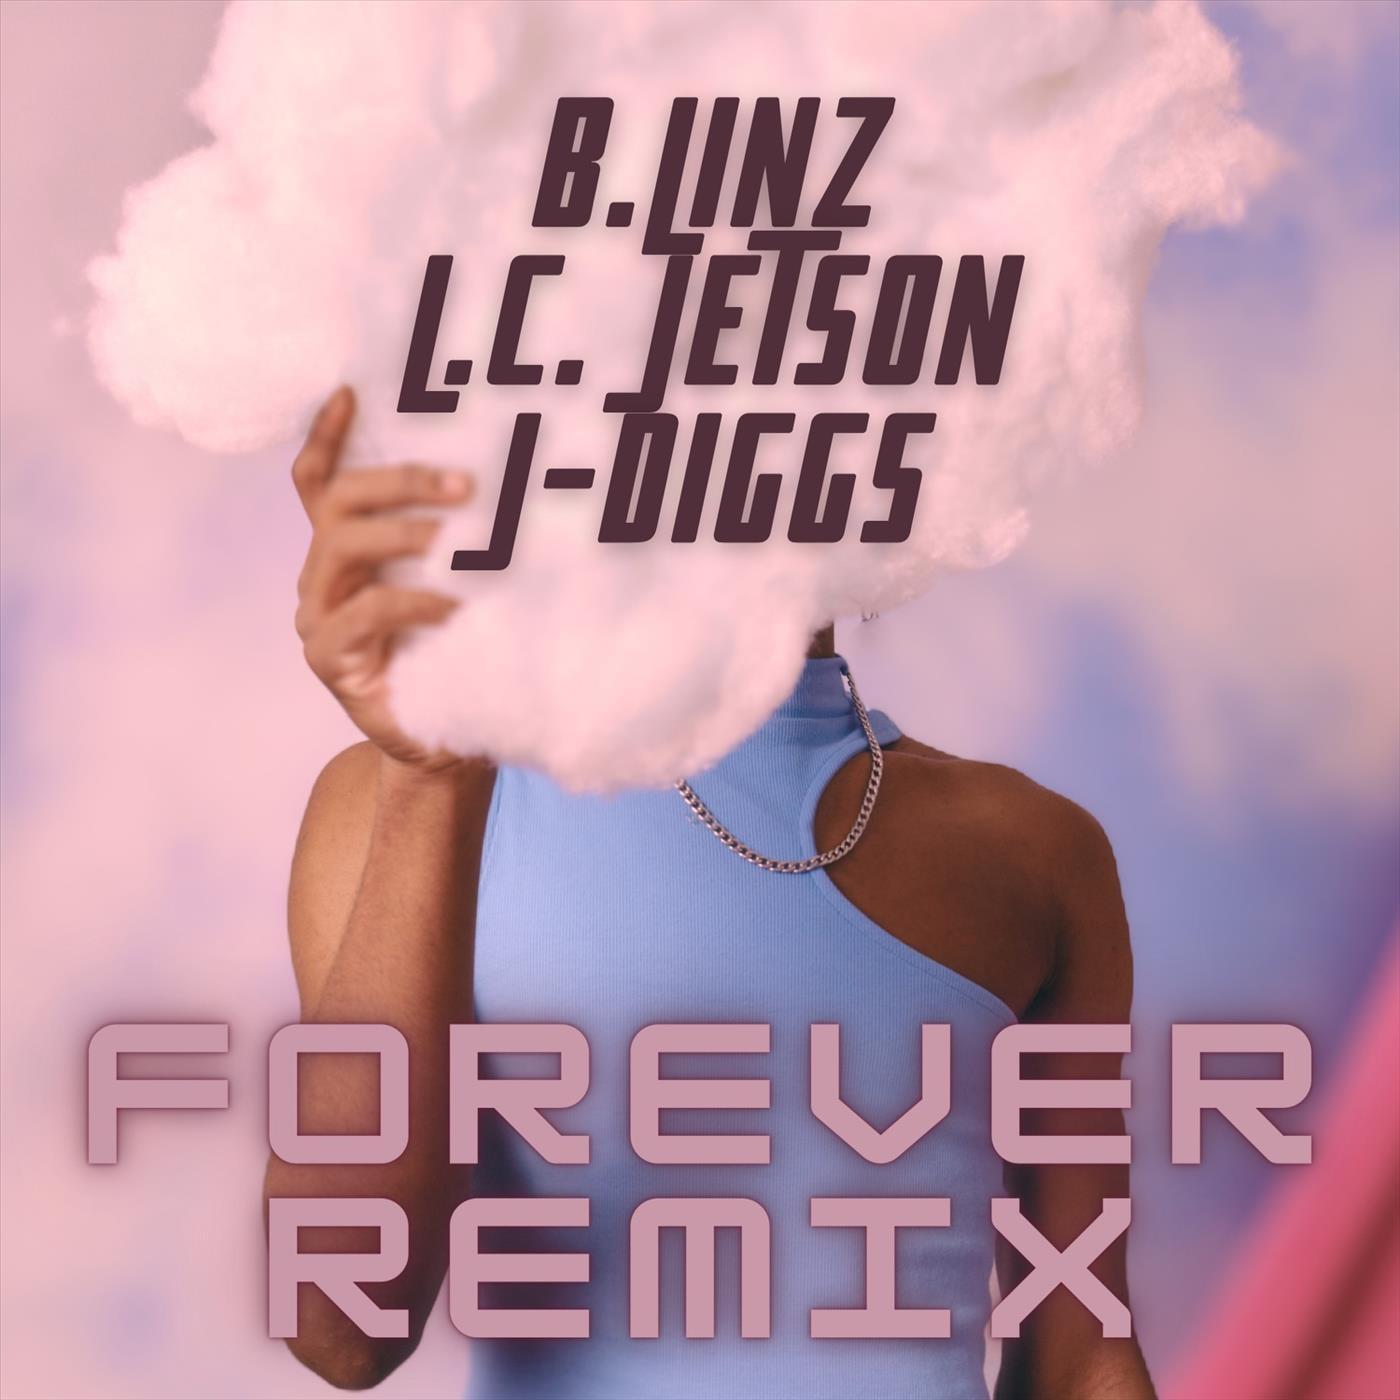 L.C. Jetson - Forever (Remix)